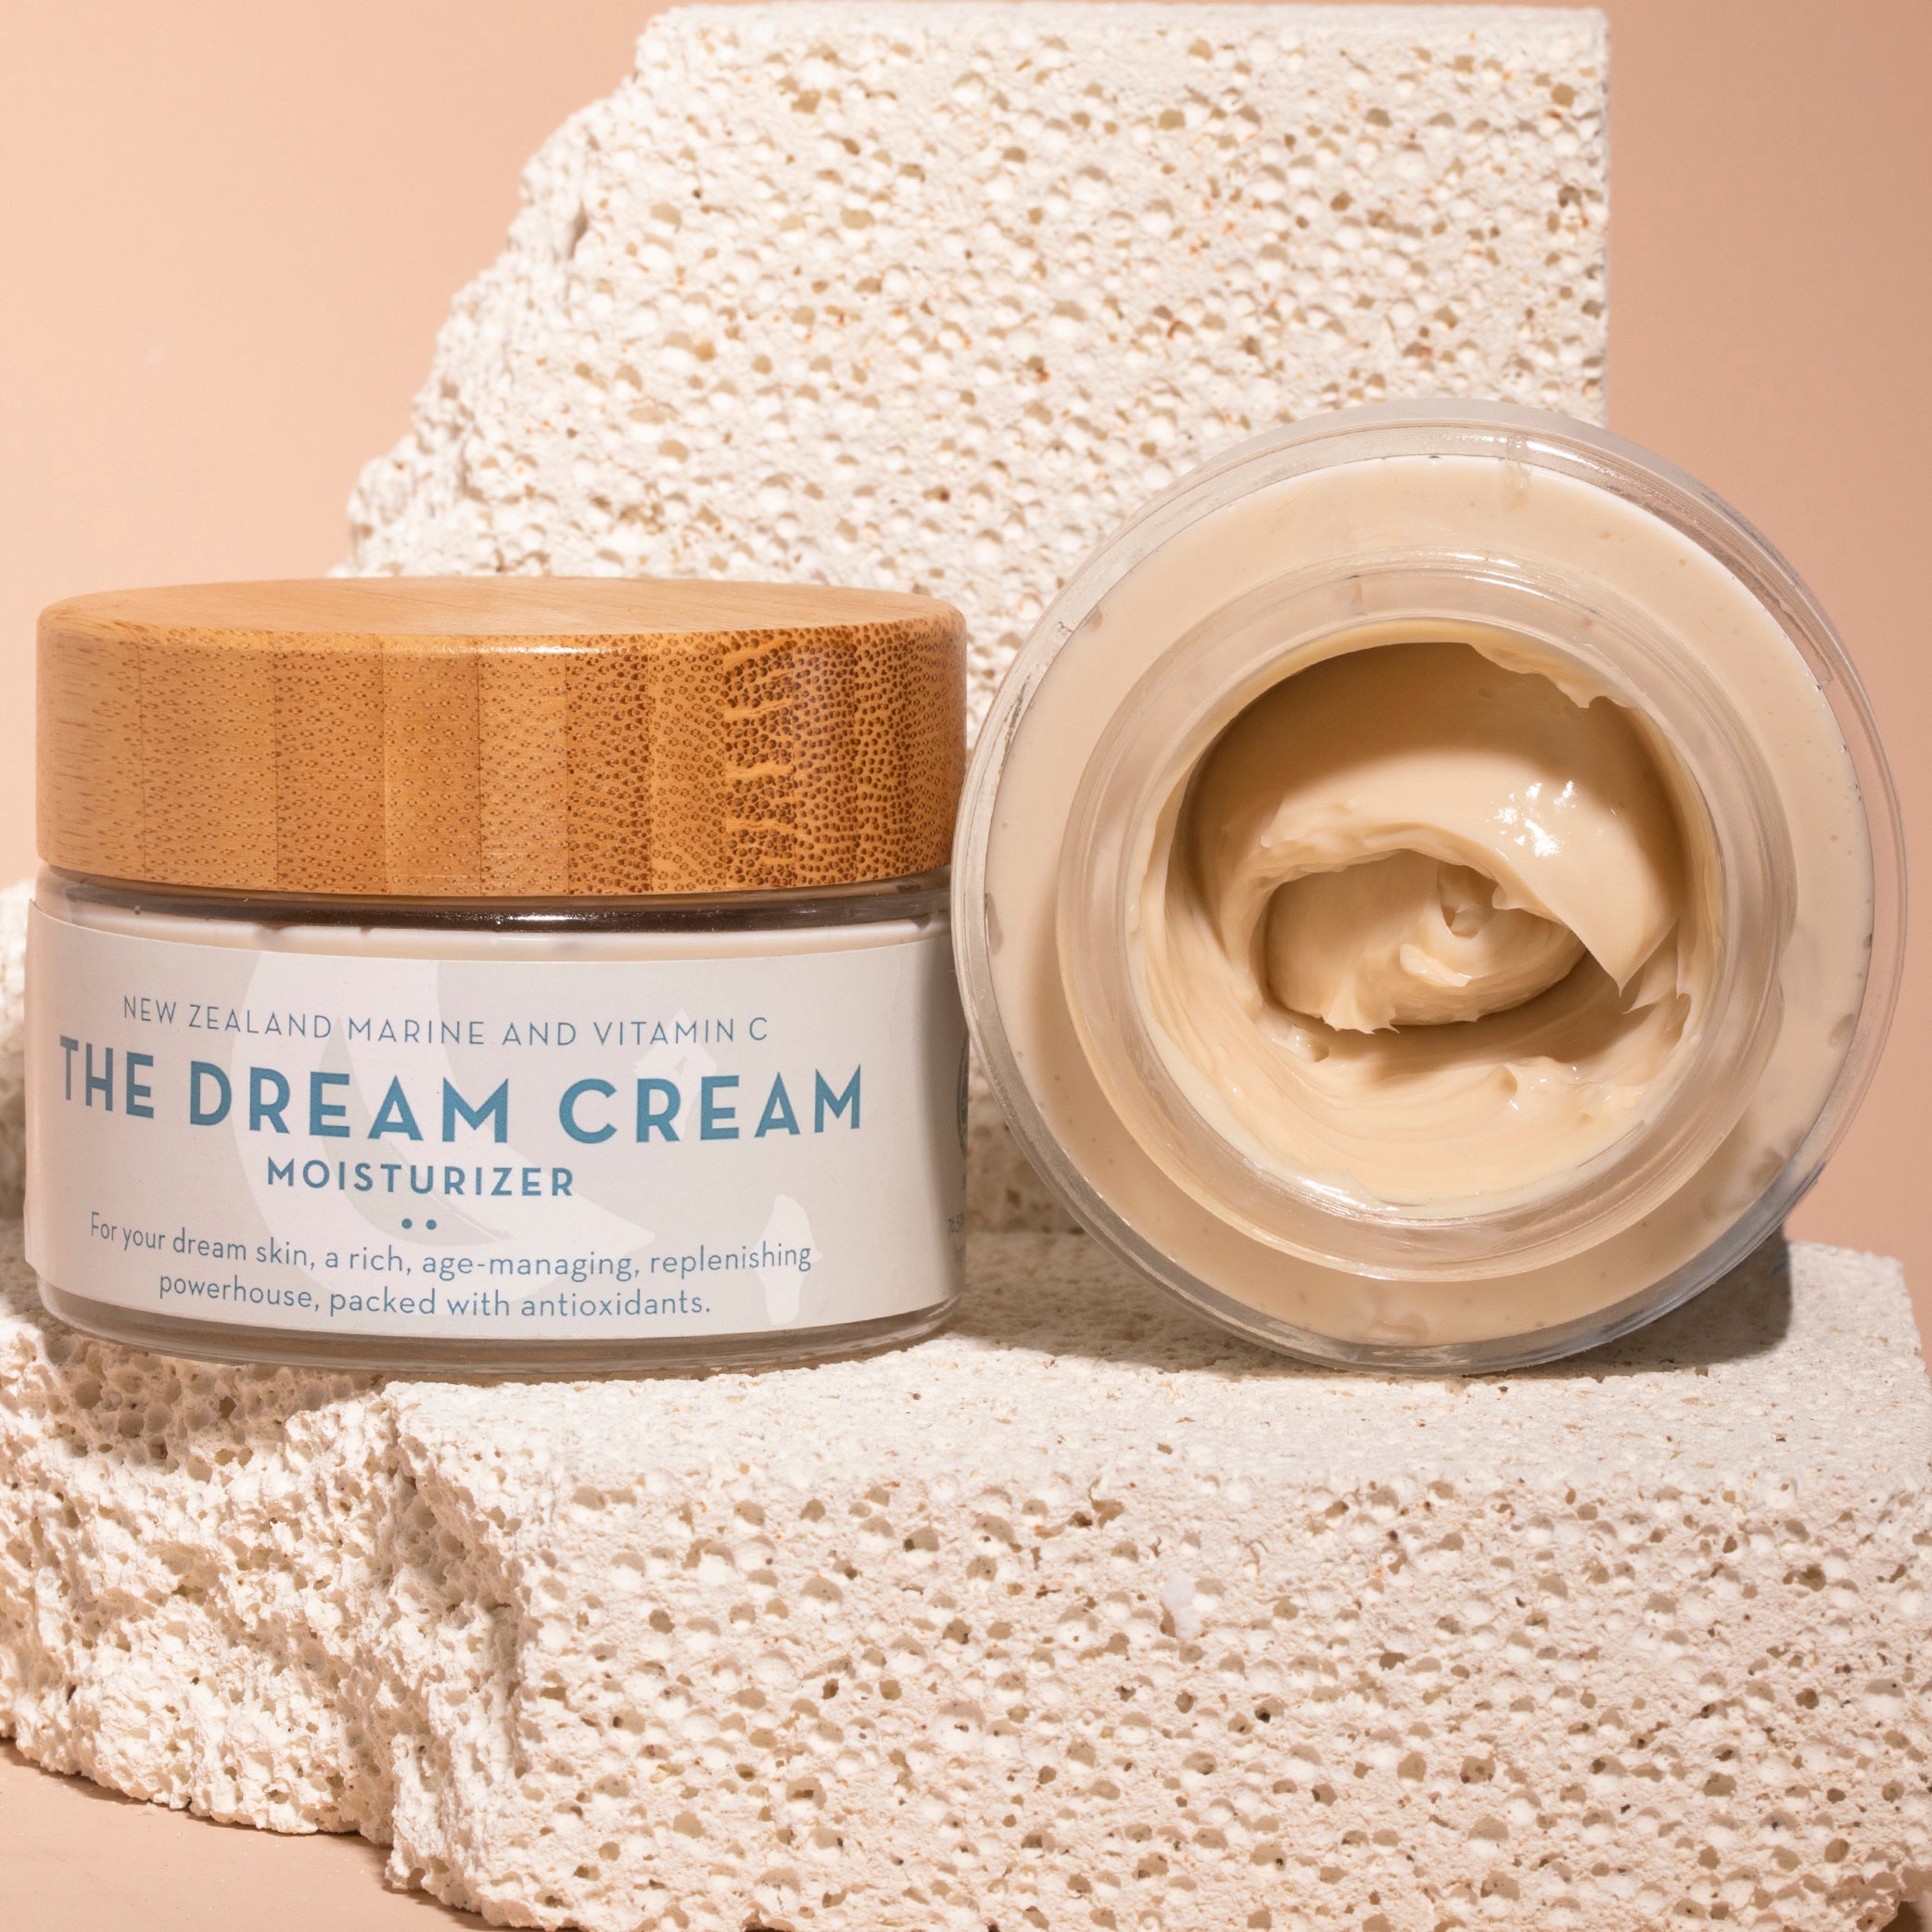 The Dream Cream